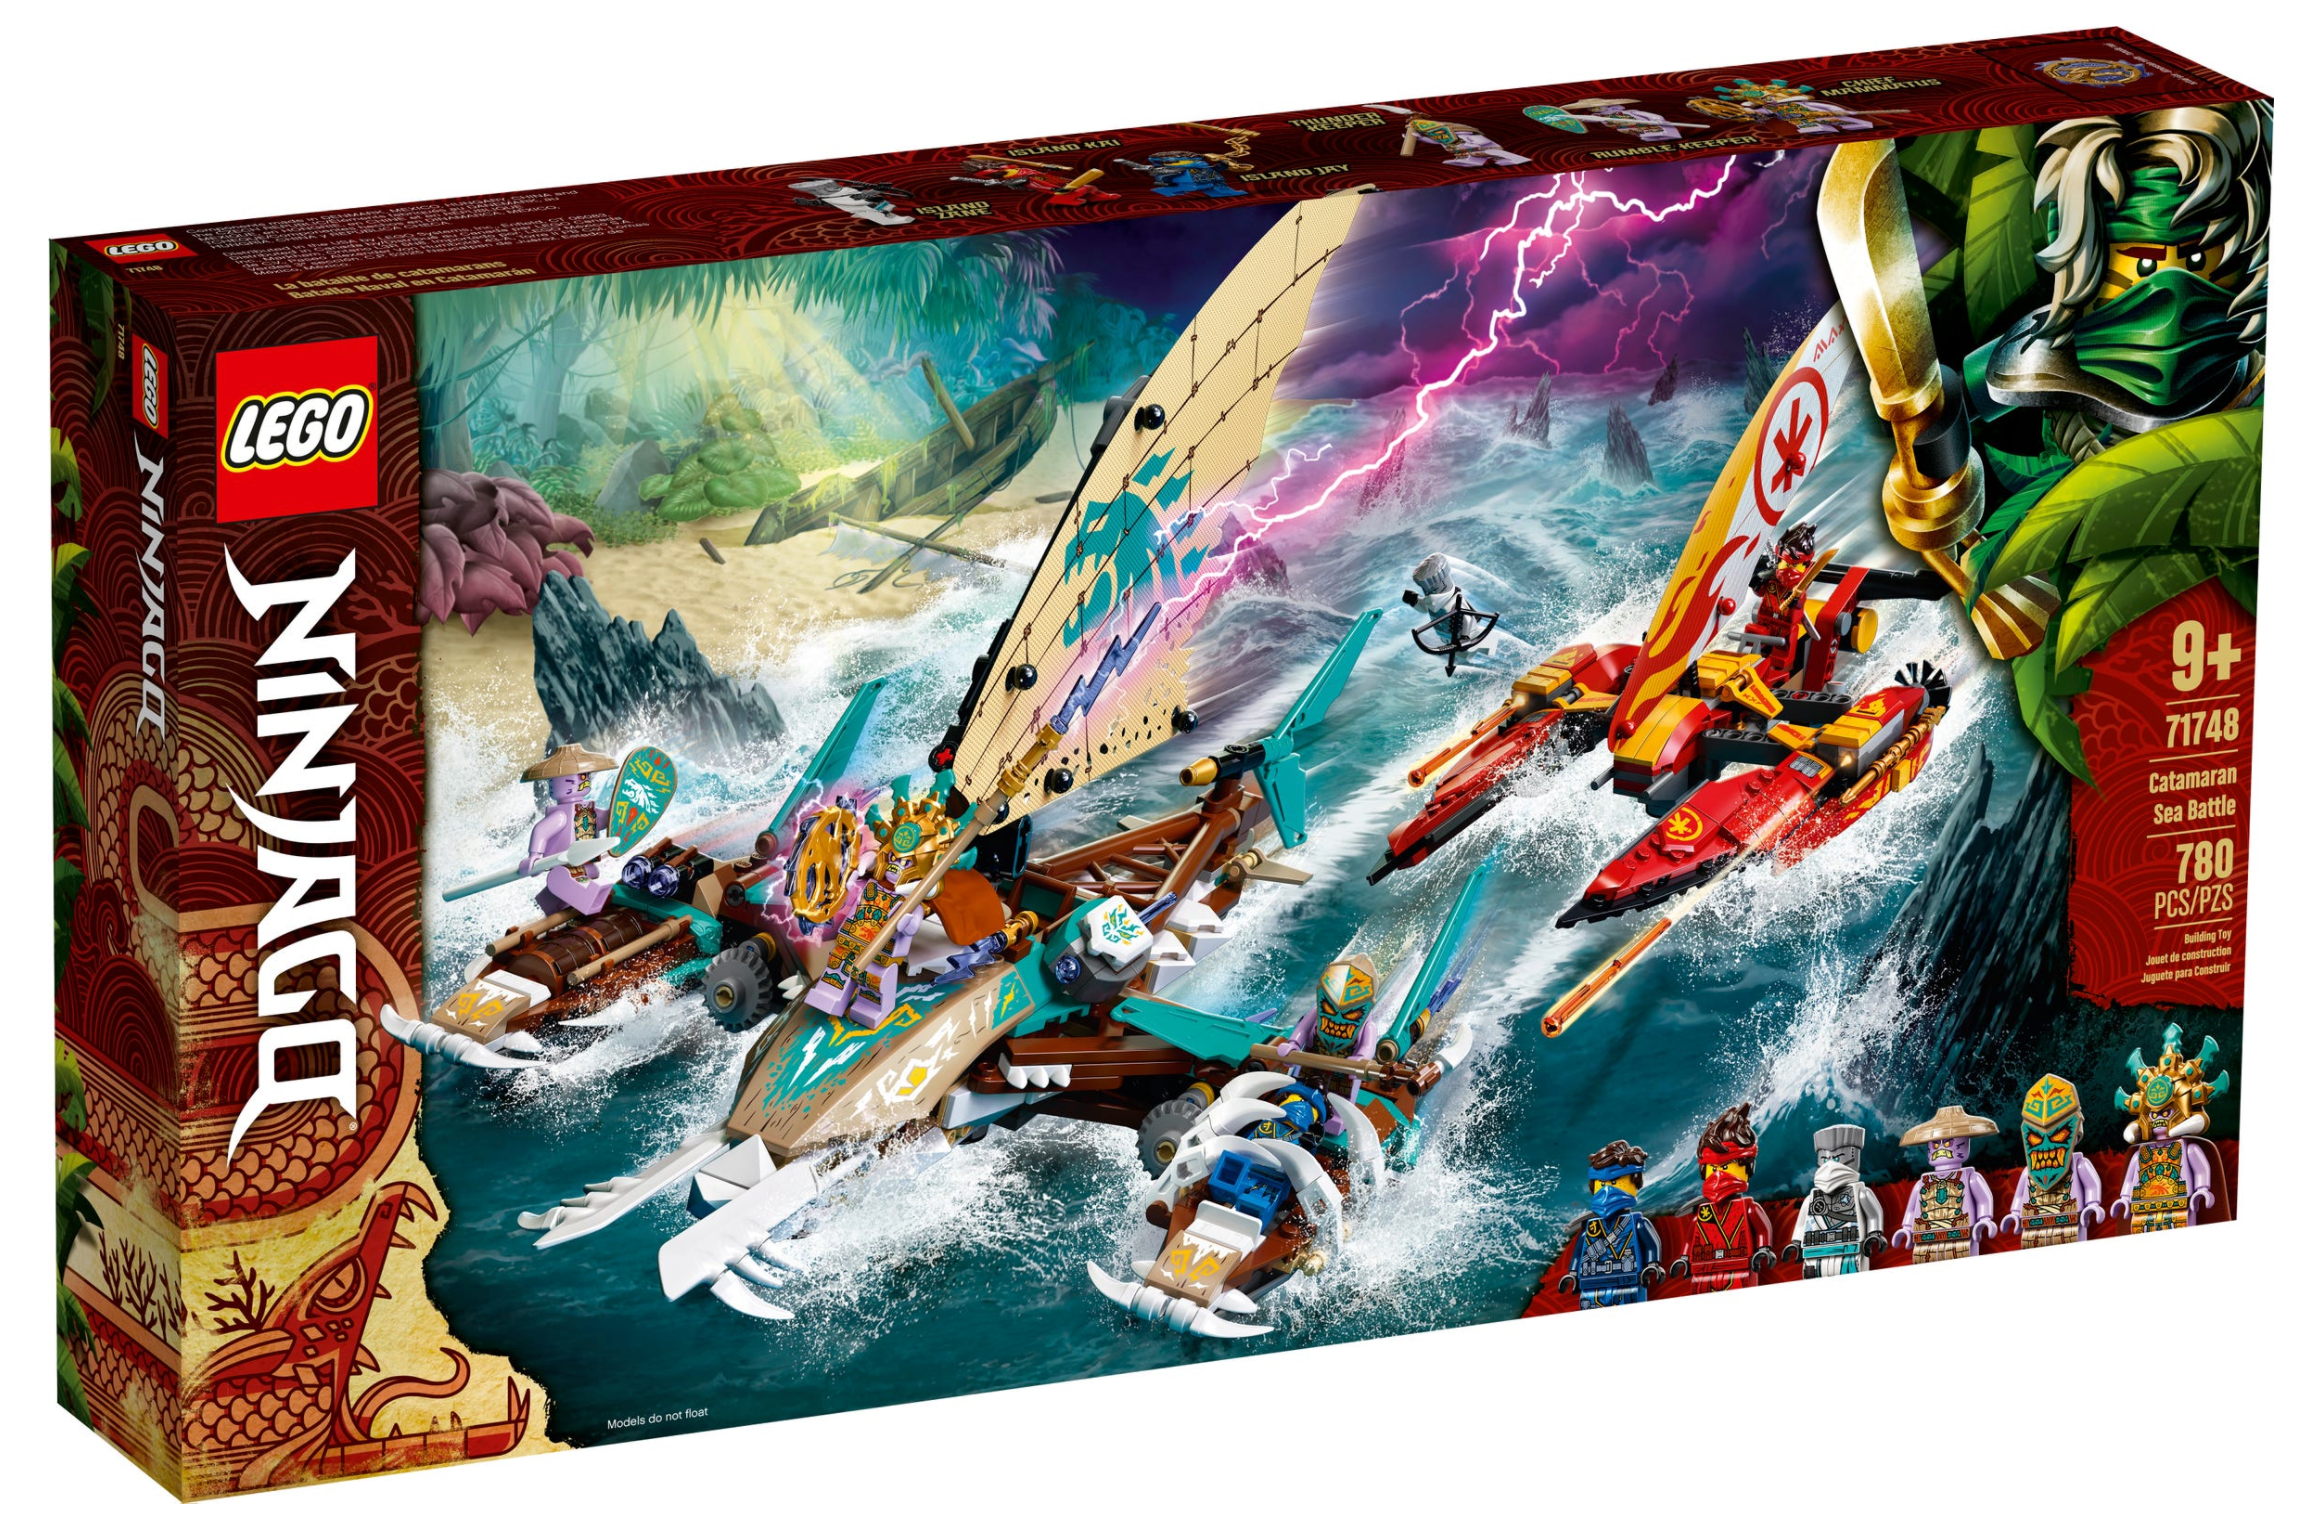 LEGO: Ninjago - Catamaran Sea Battle